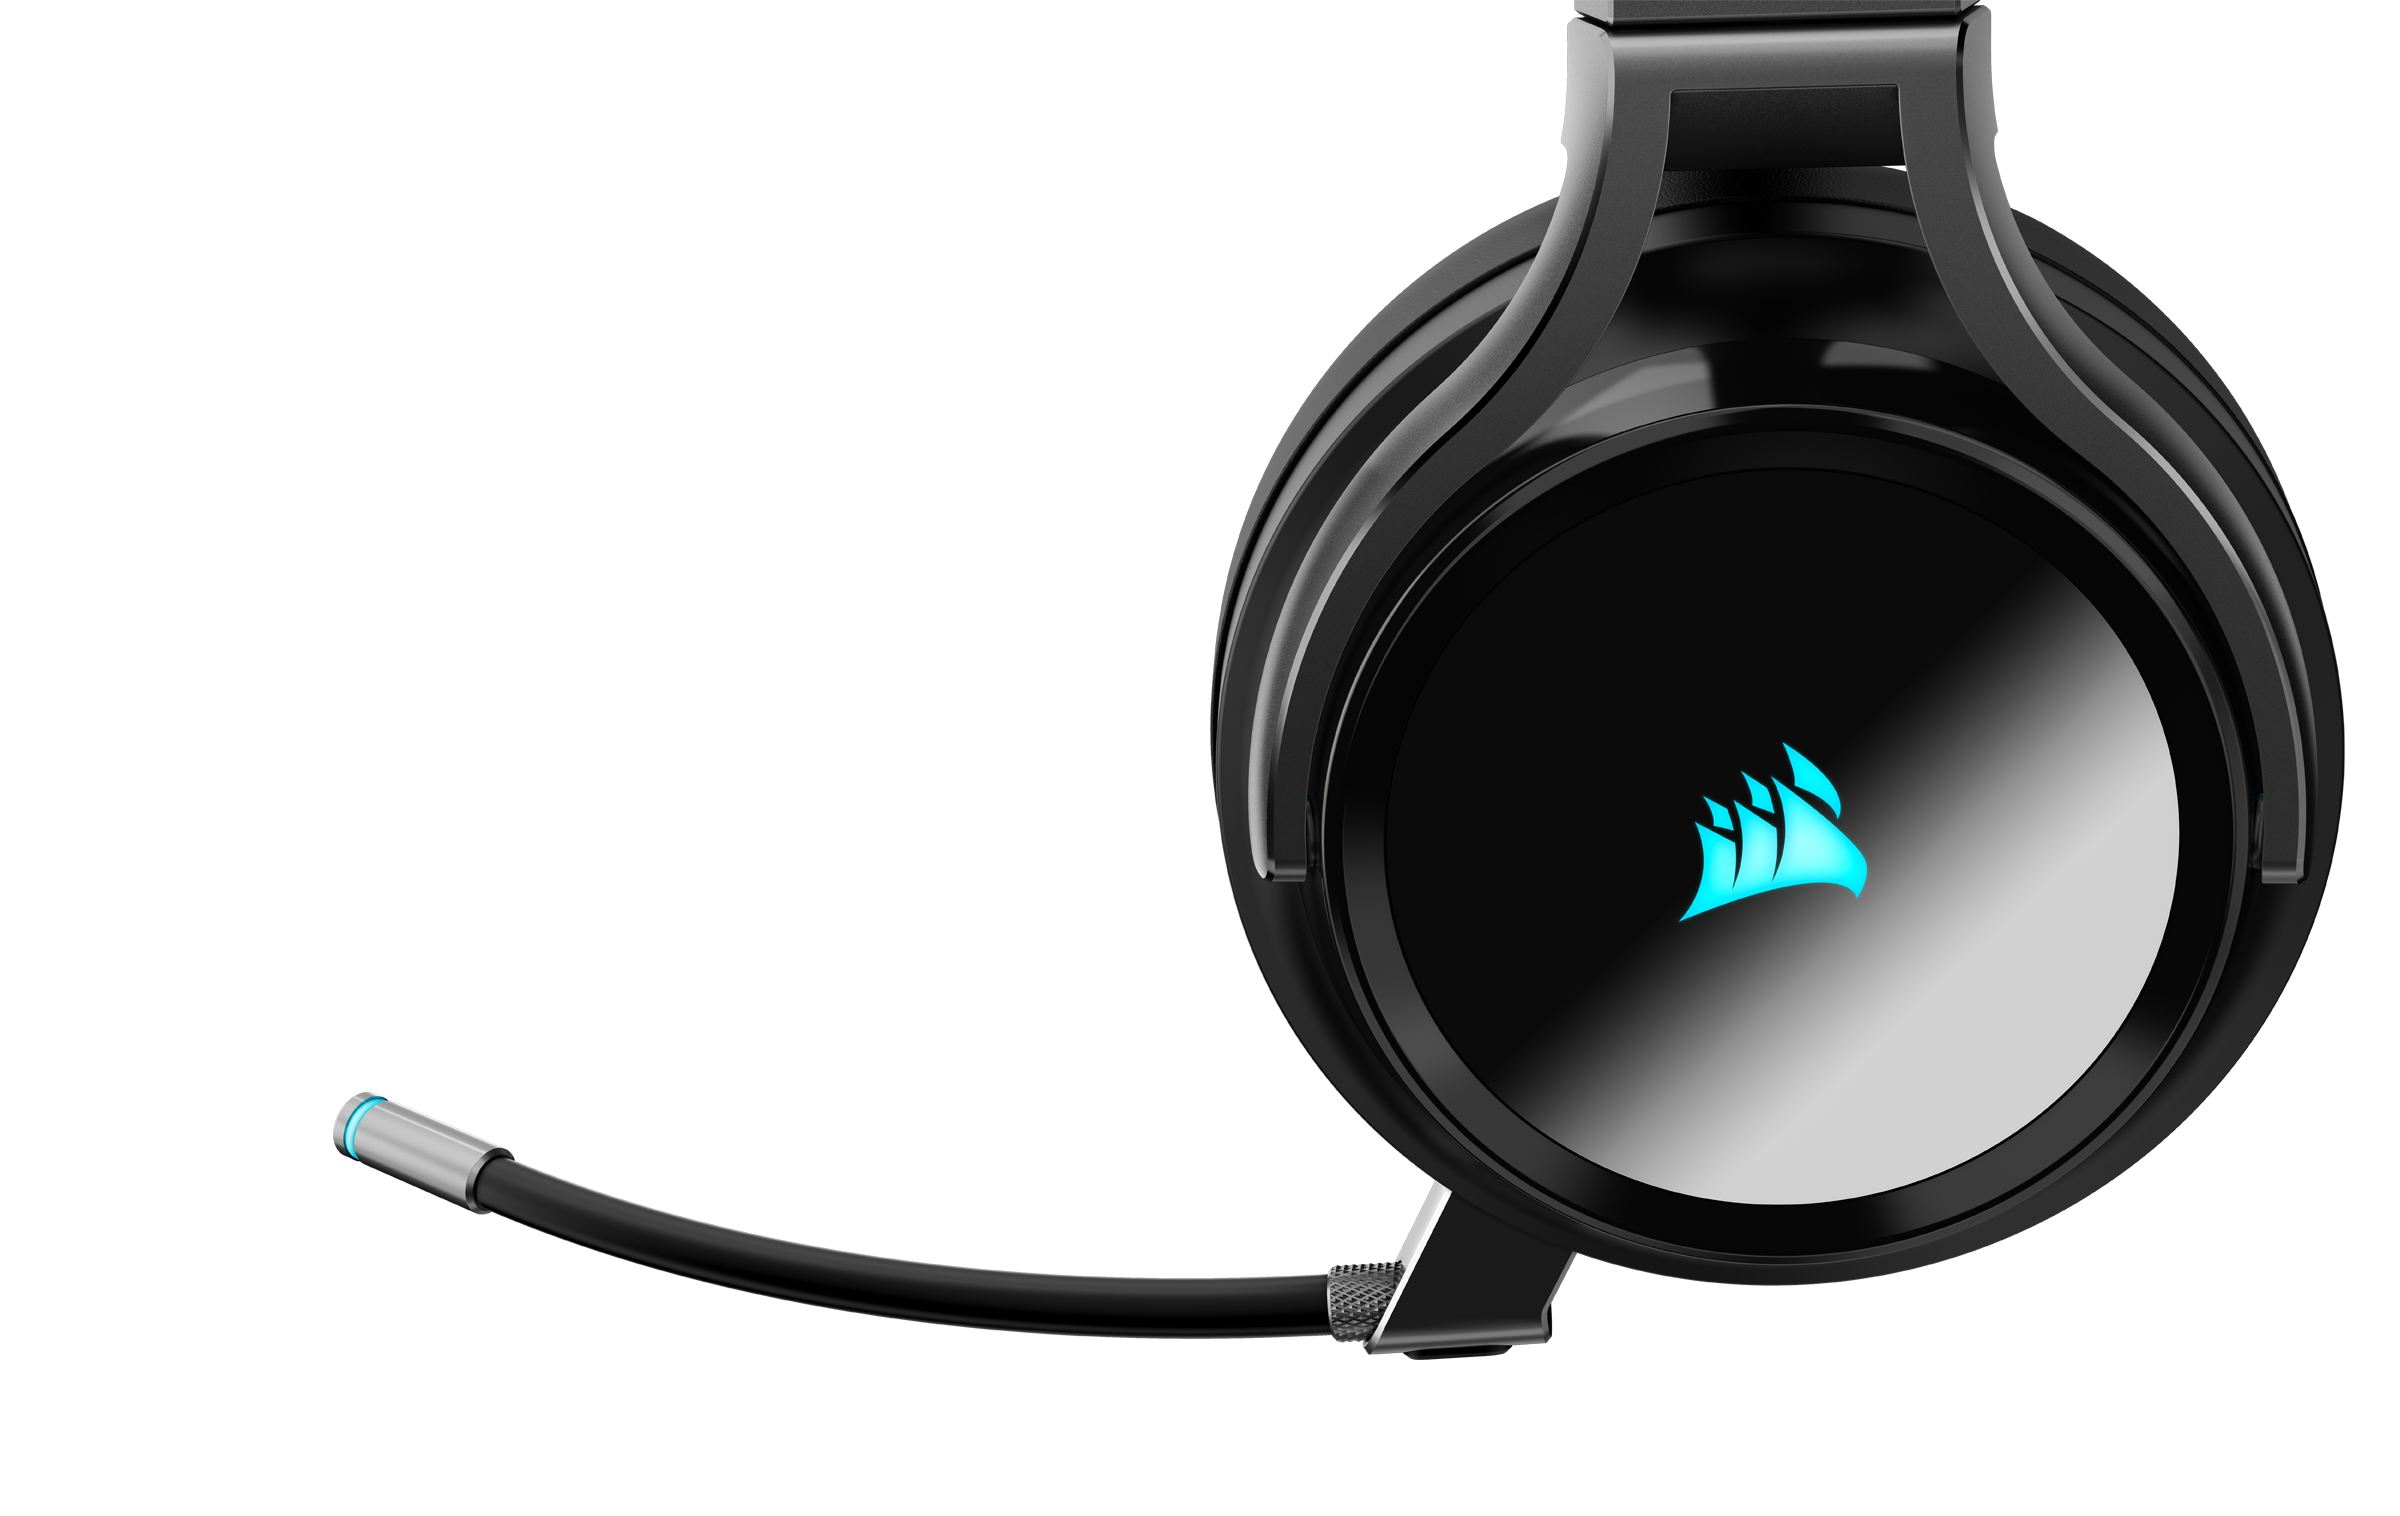 Carbon Headset CORSAIR Virtuoso RGB Gaming Over-ear Wireless,